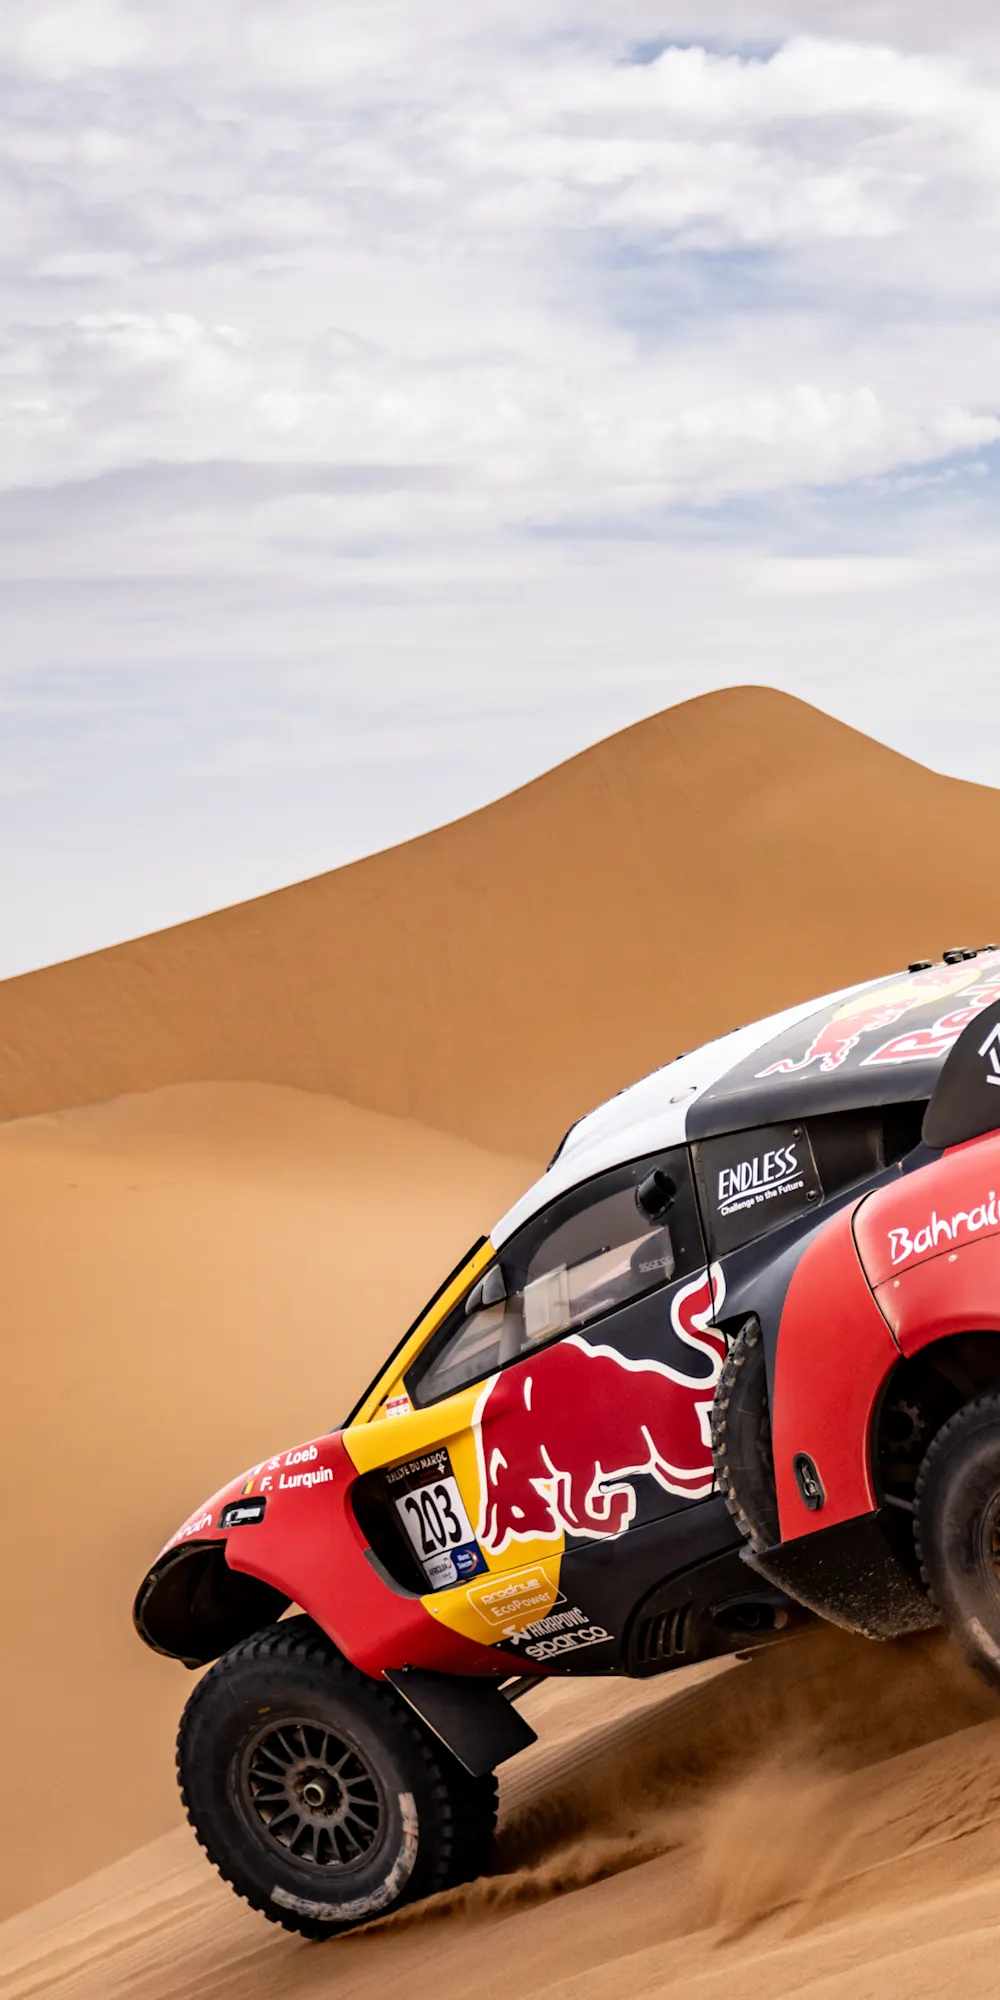 Sebastien Loeb: Rally – Red Bull Athlete Profile